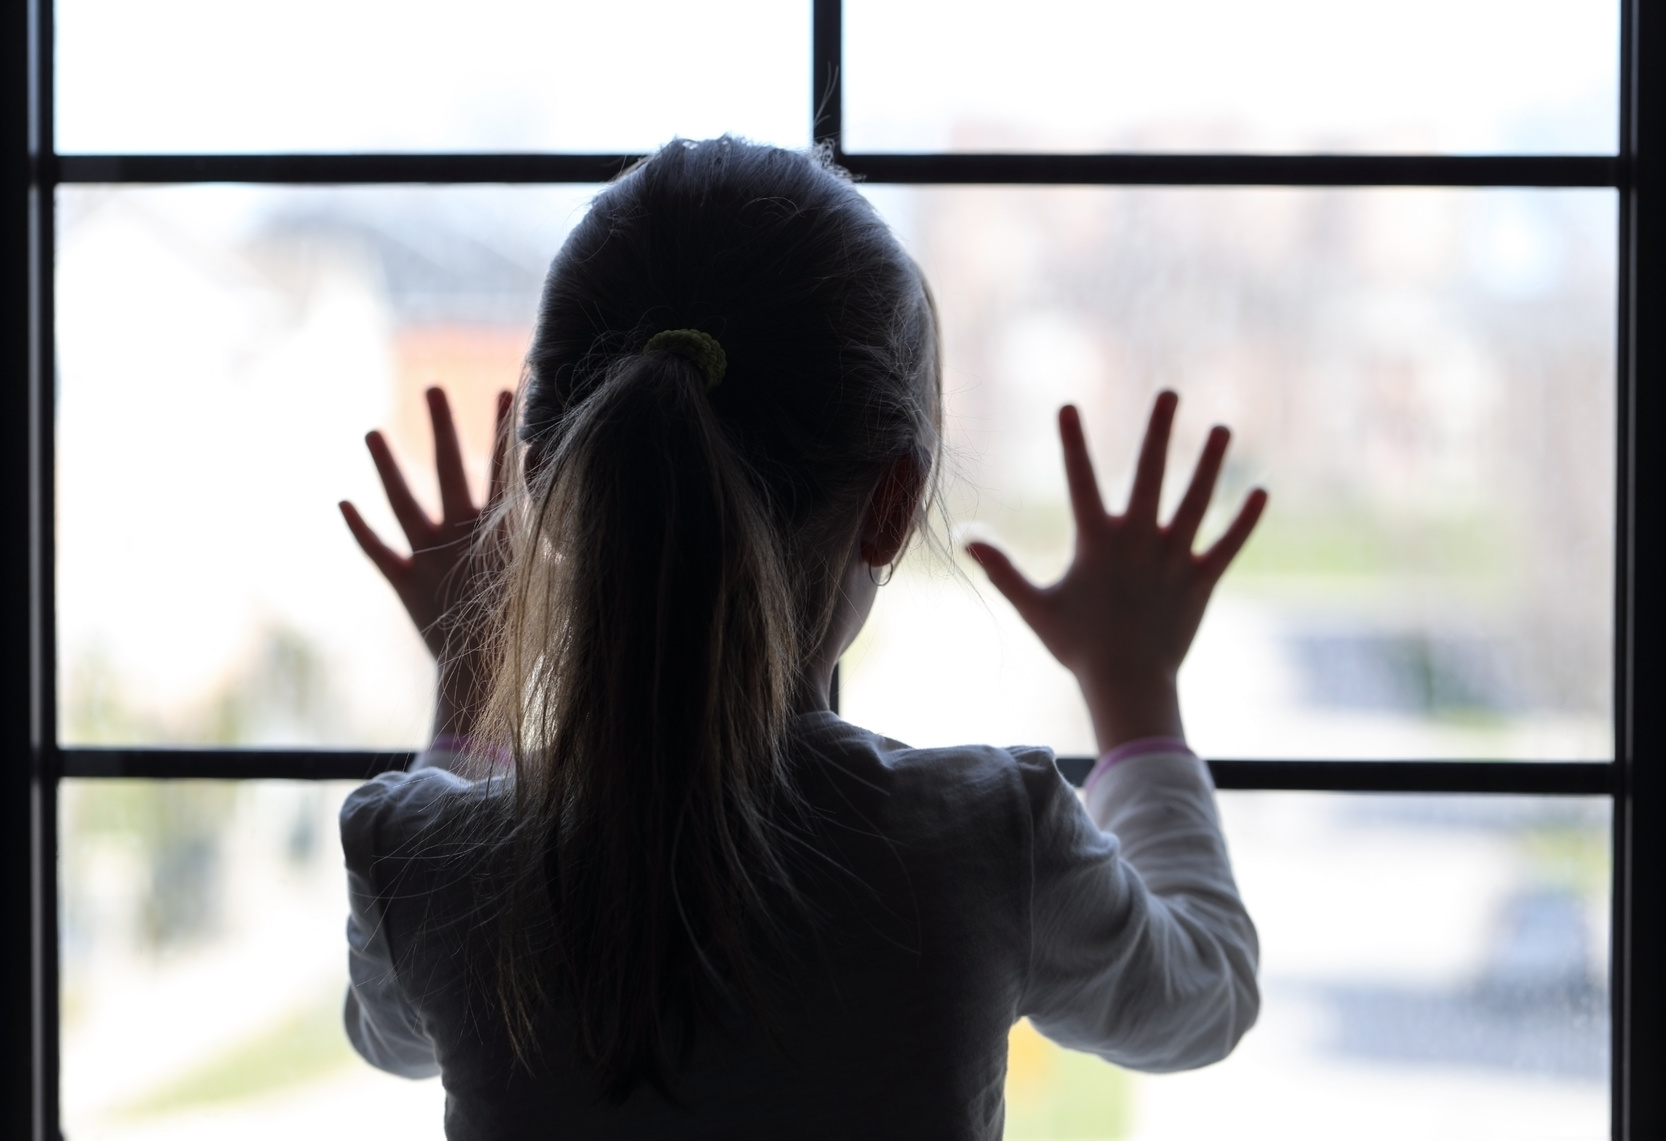 Kind im Schatten blickt aus dem hellen Fenster